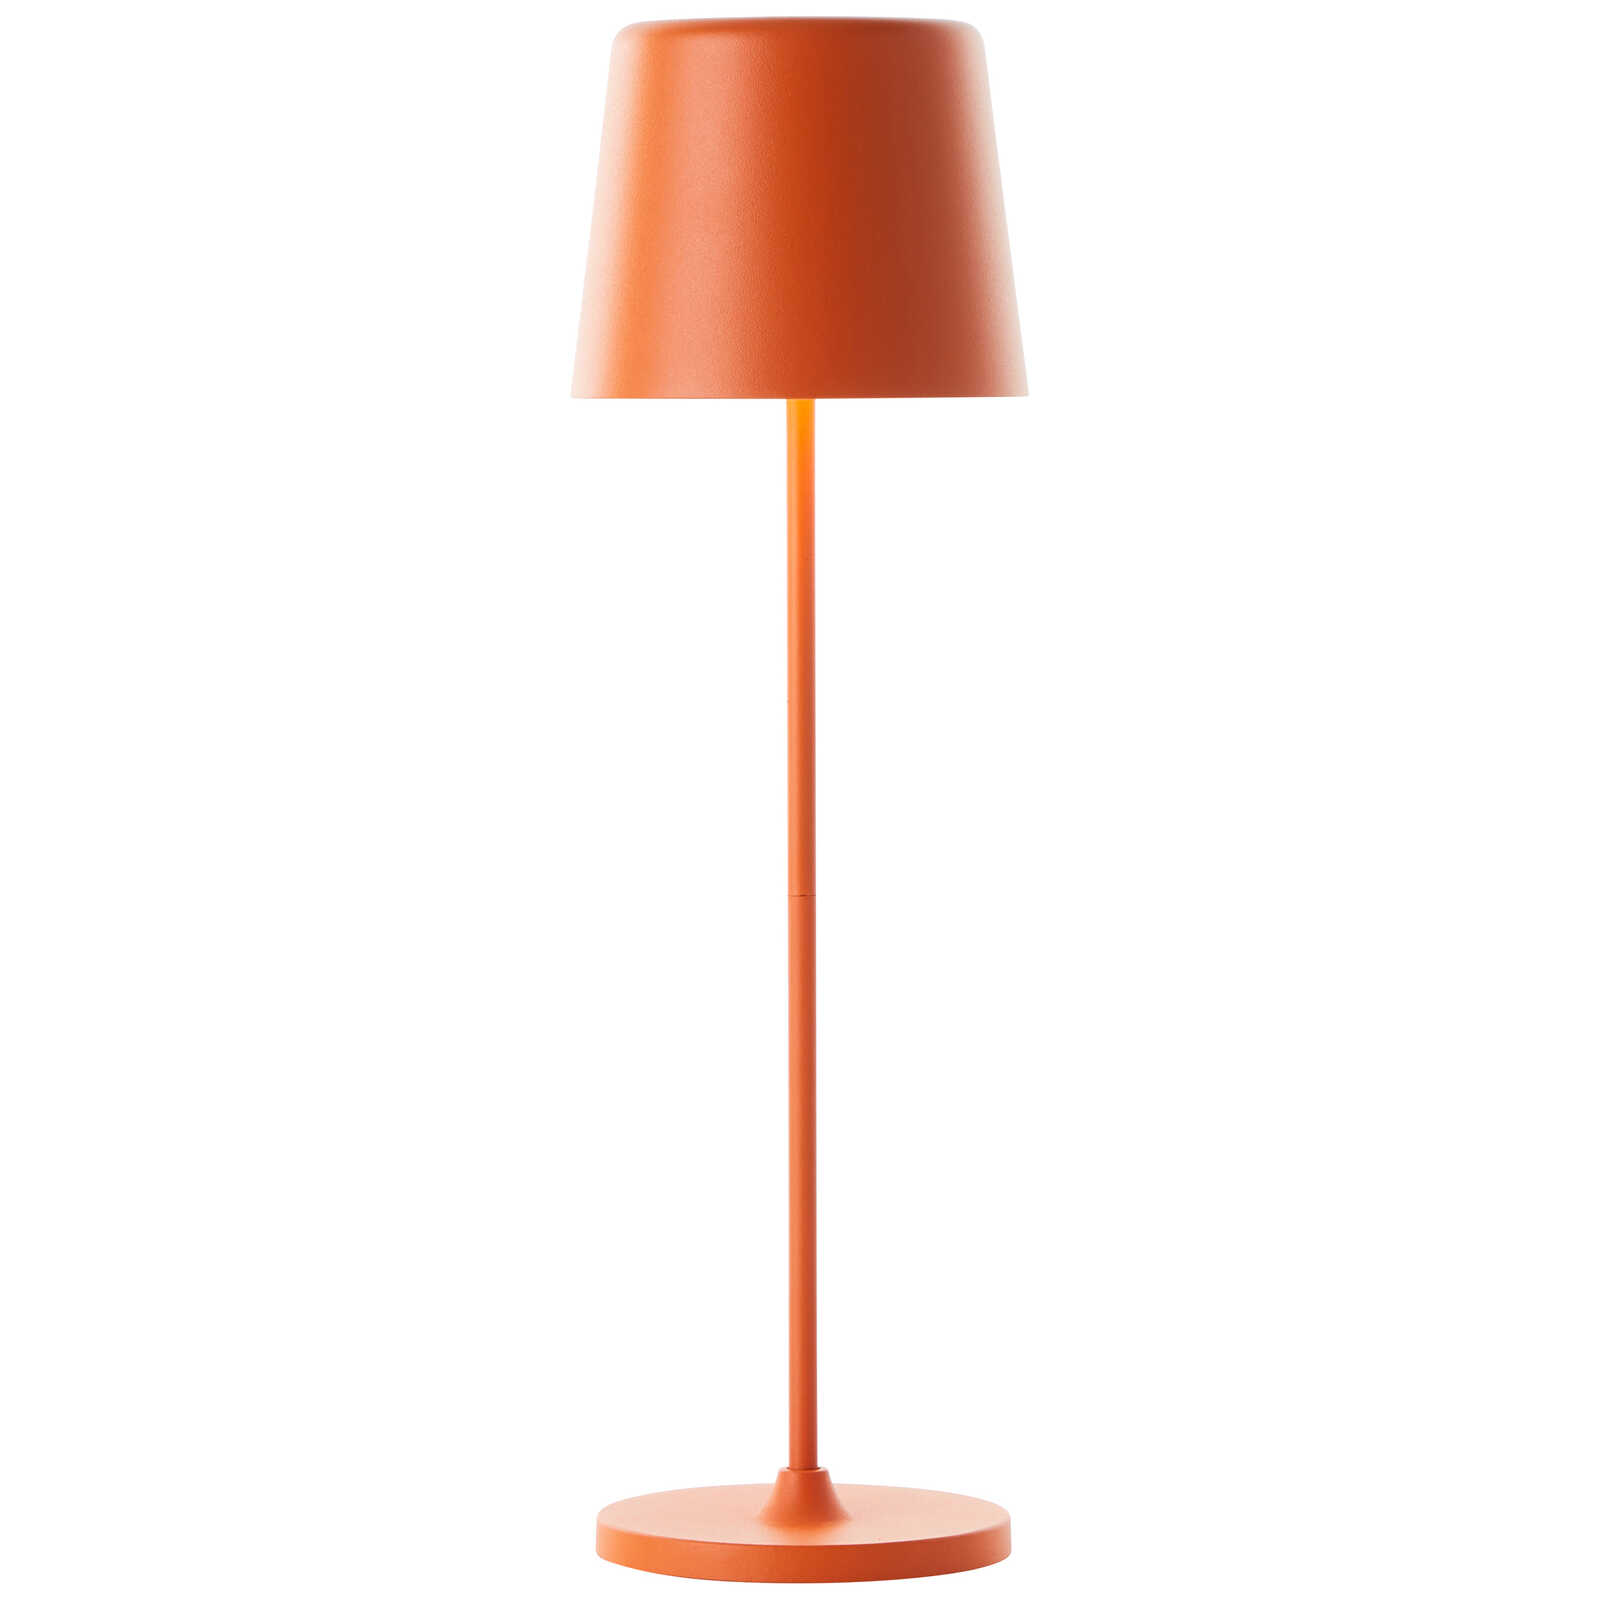             Metal table lamp - Cosy 7 - Orange
        